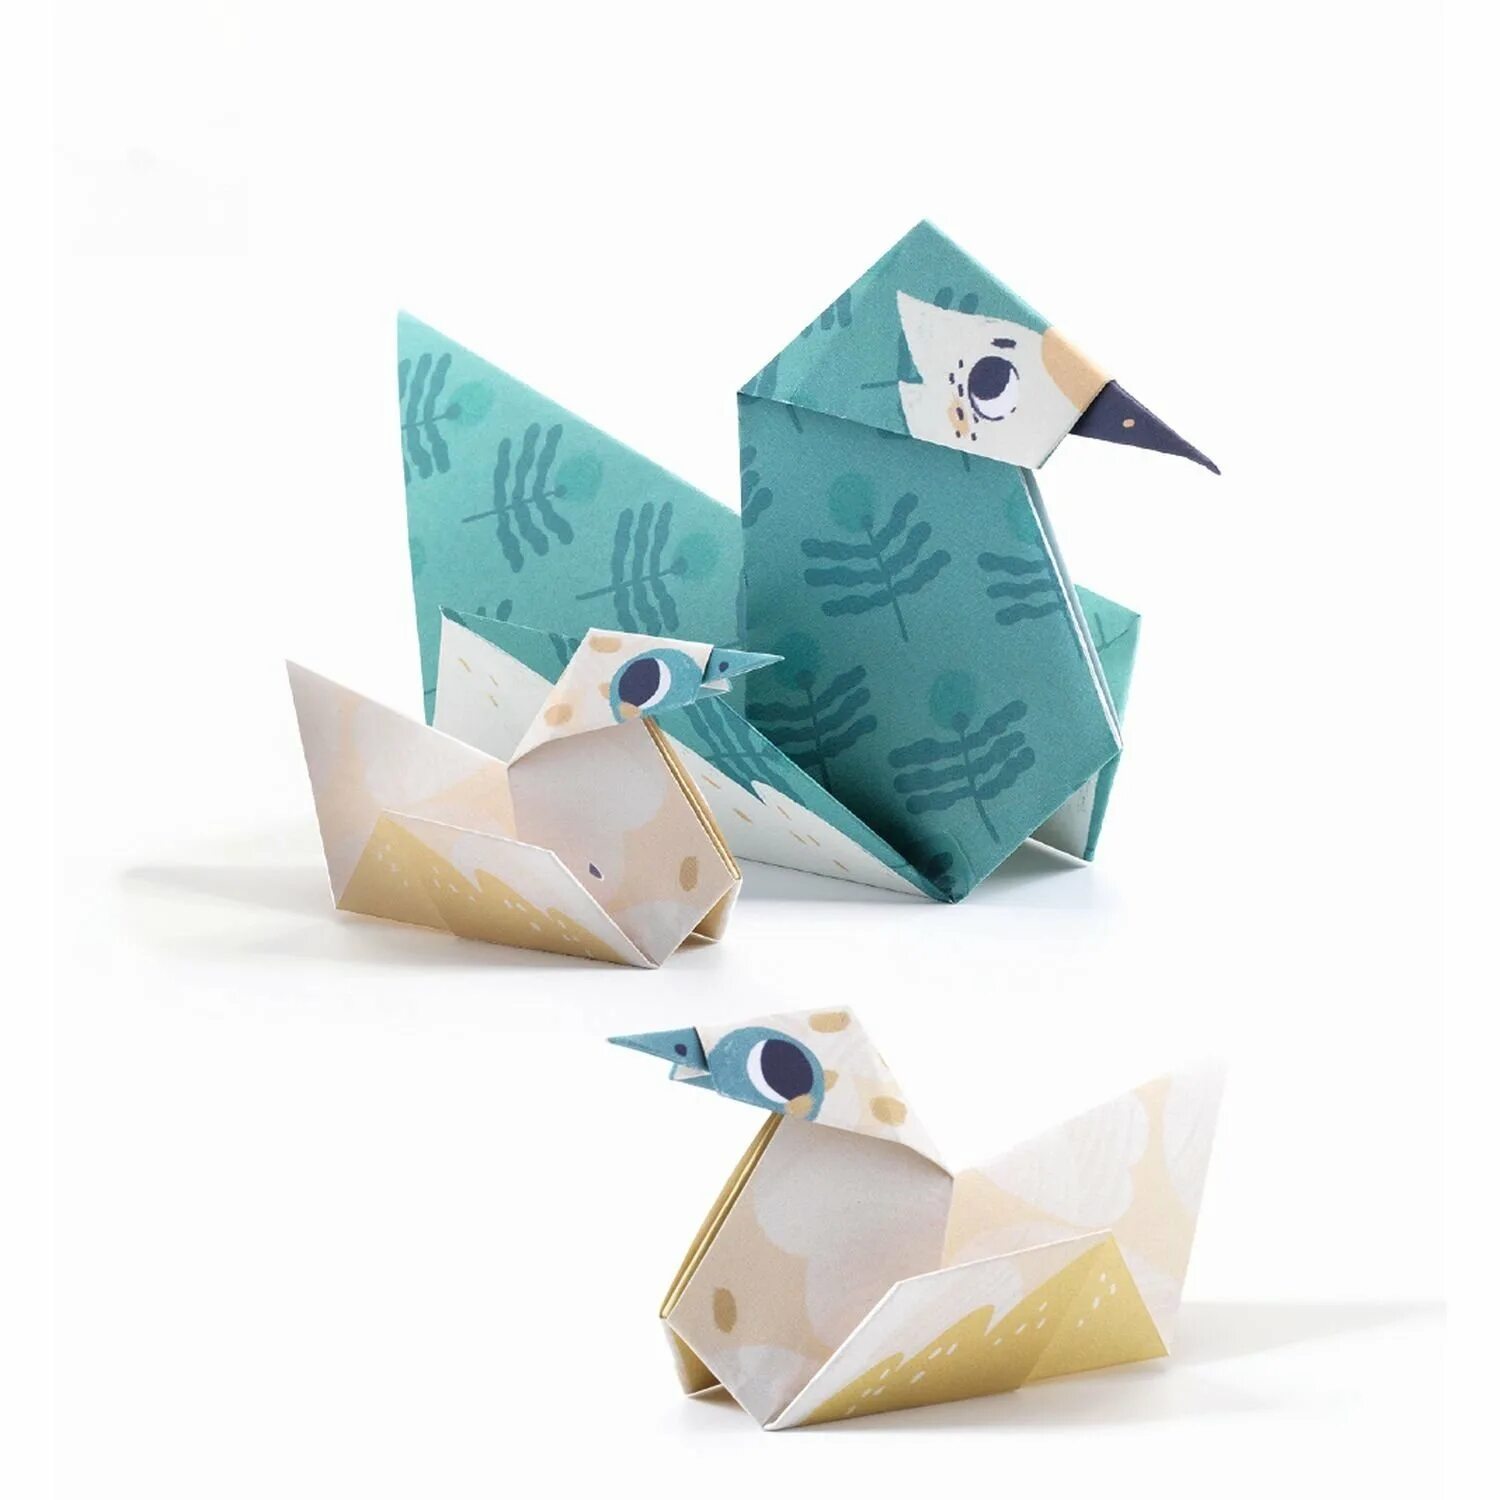 Джеко оригами. Djeco оригами 08763. Оригами Djeco семьи. Набор для оригами.